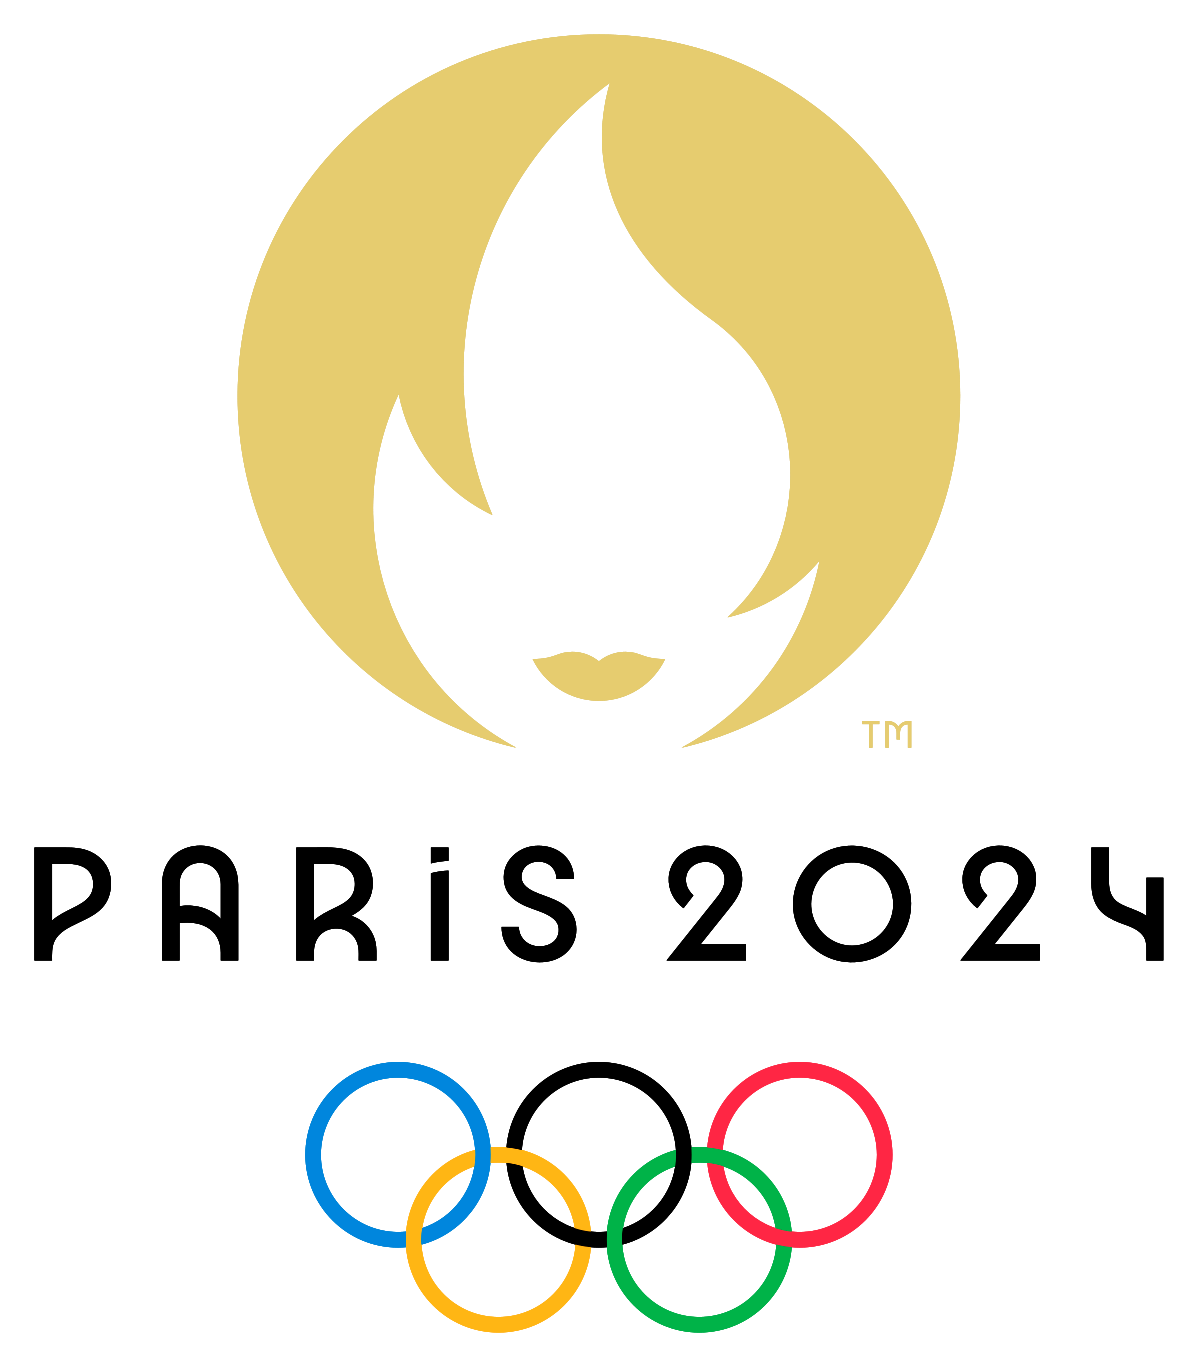 COVID19 Paris plans open Olympics in 2024